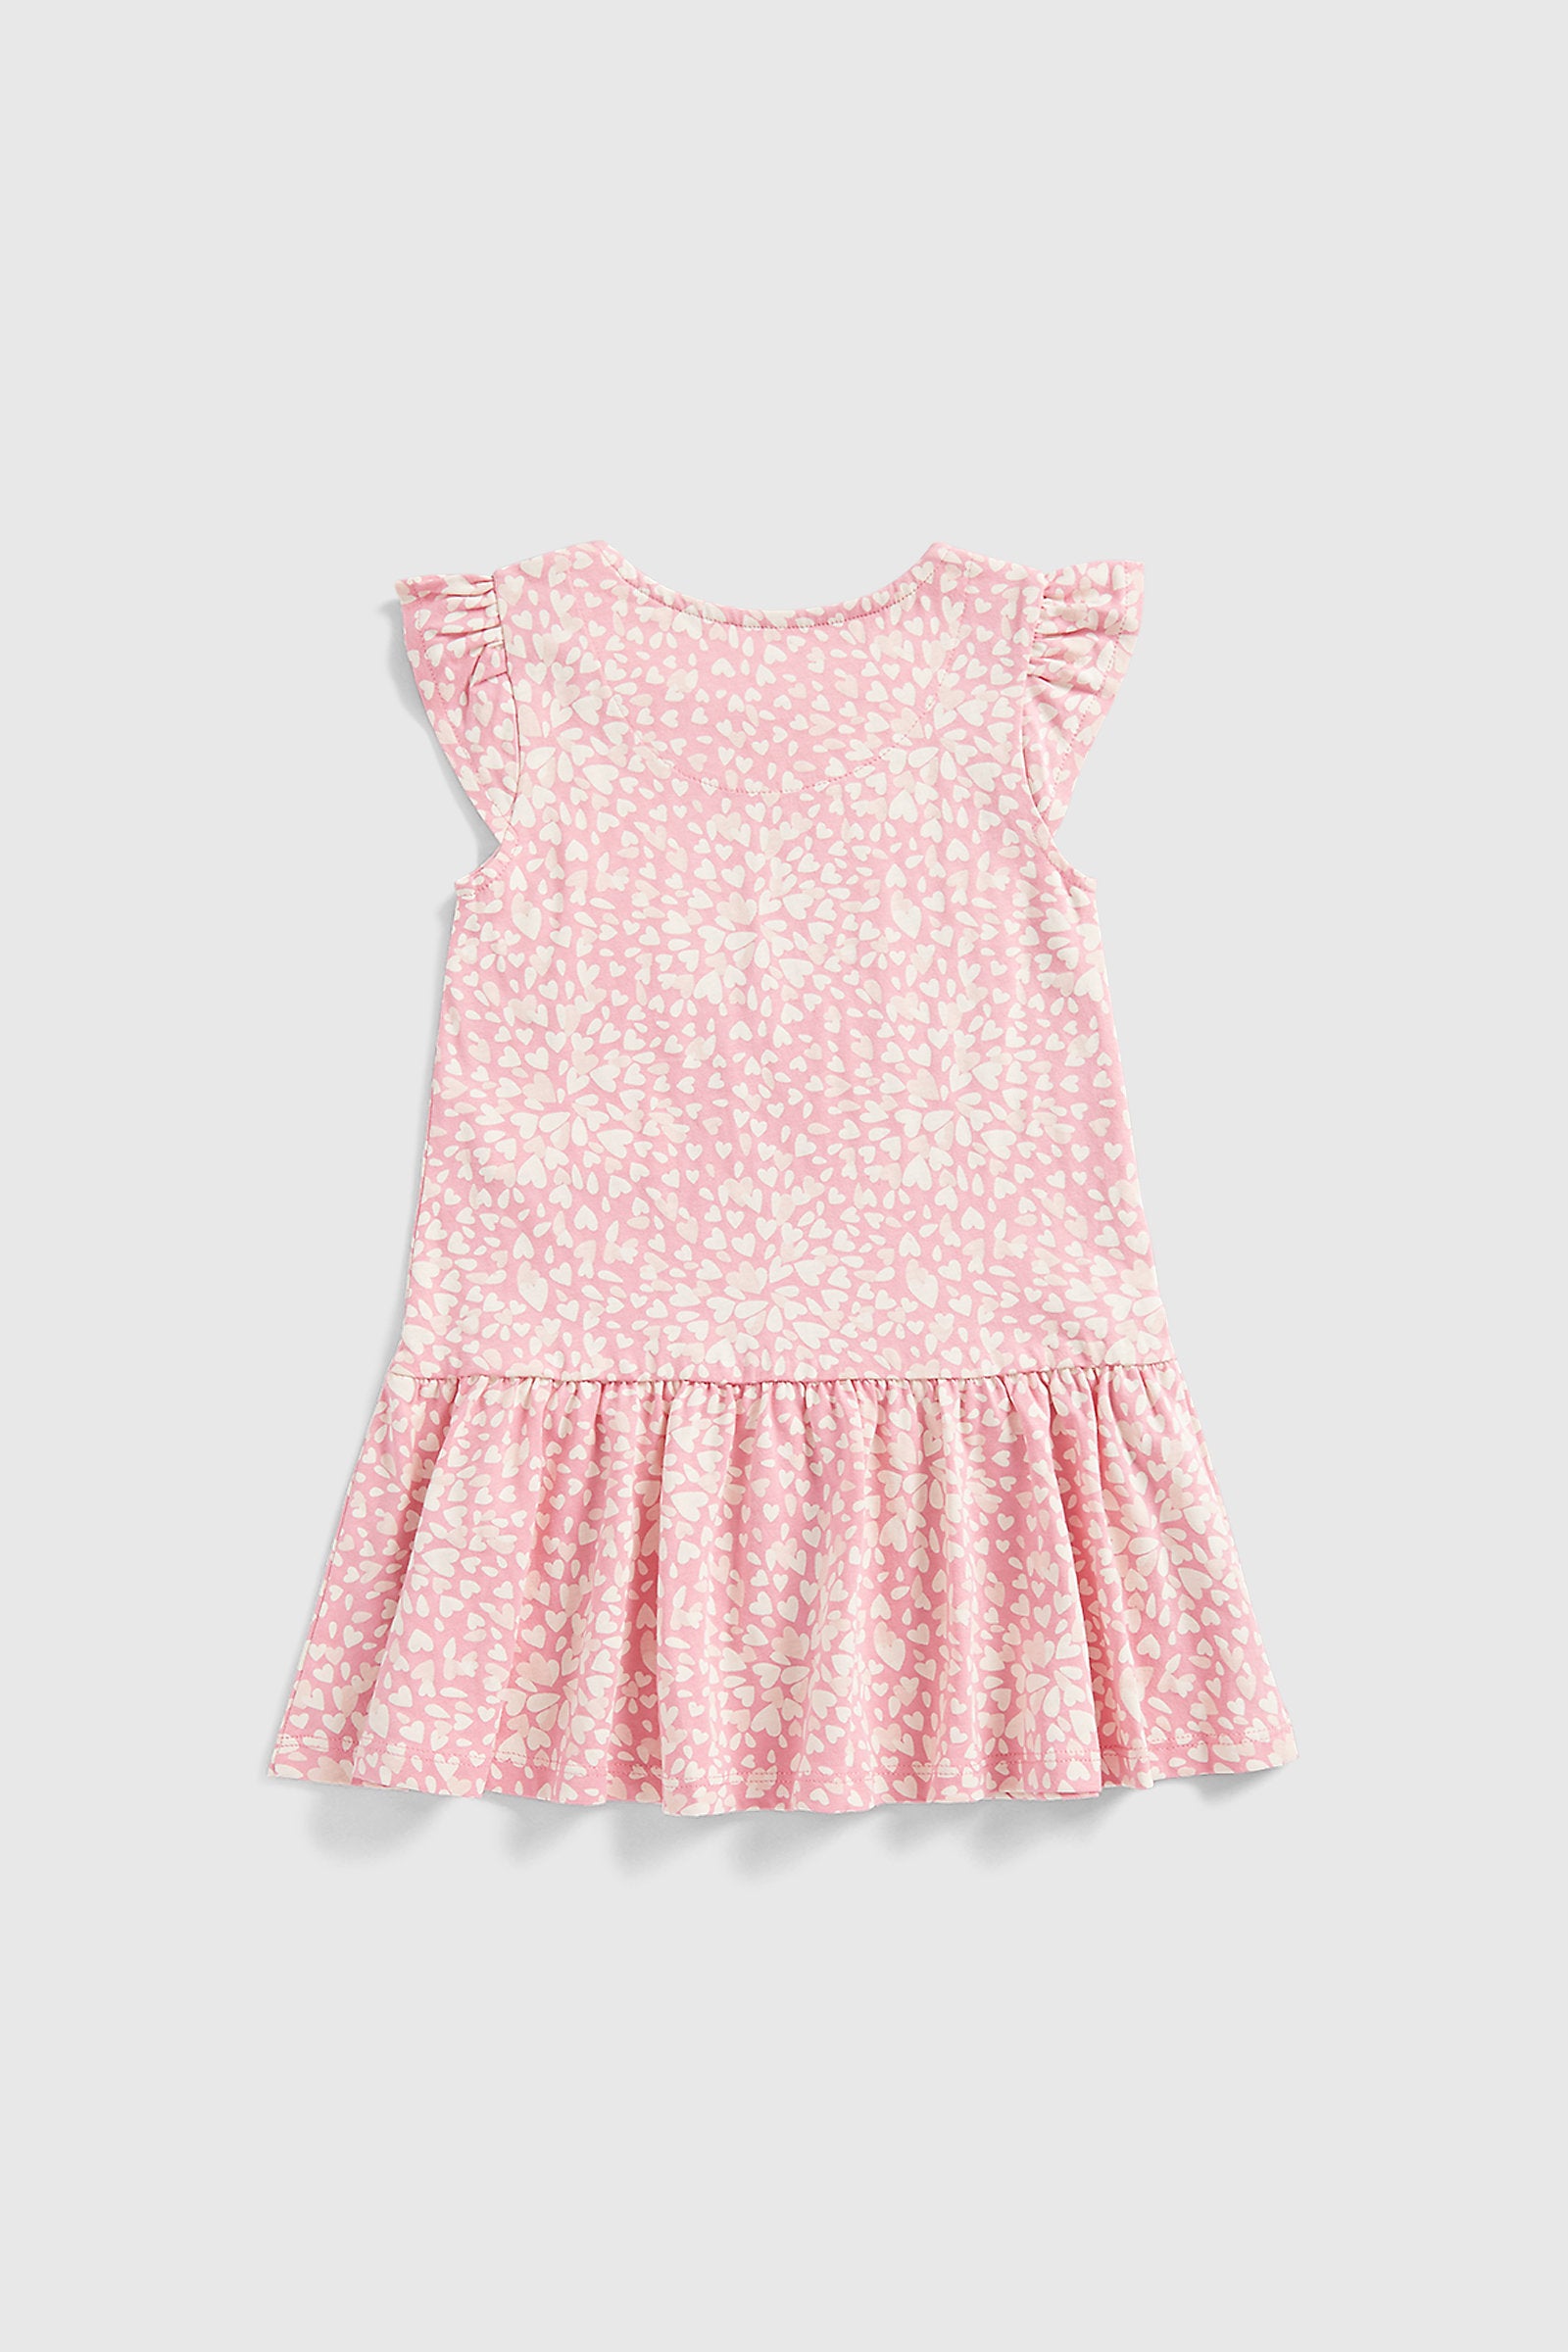 Mothercare Pink Heart Jersey Dress